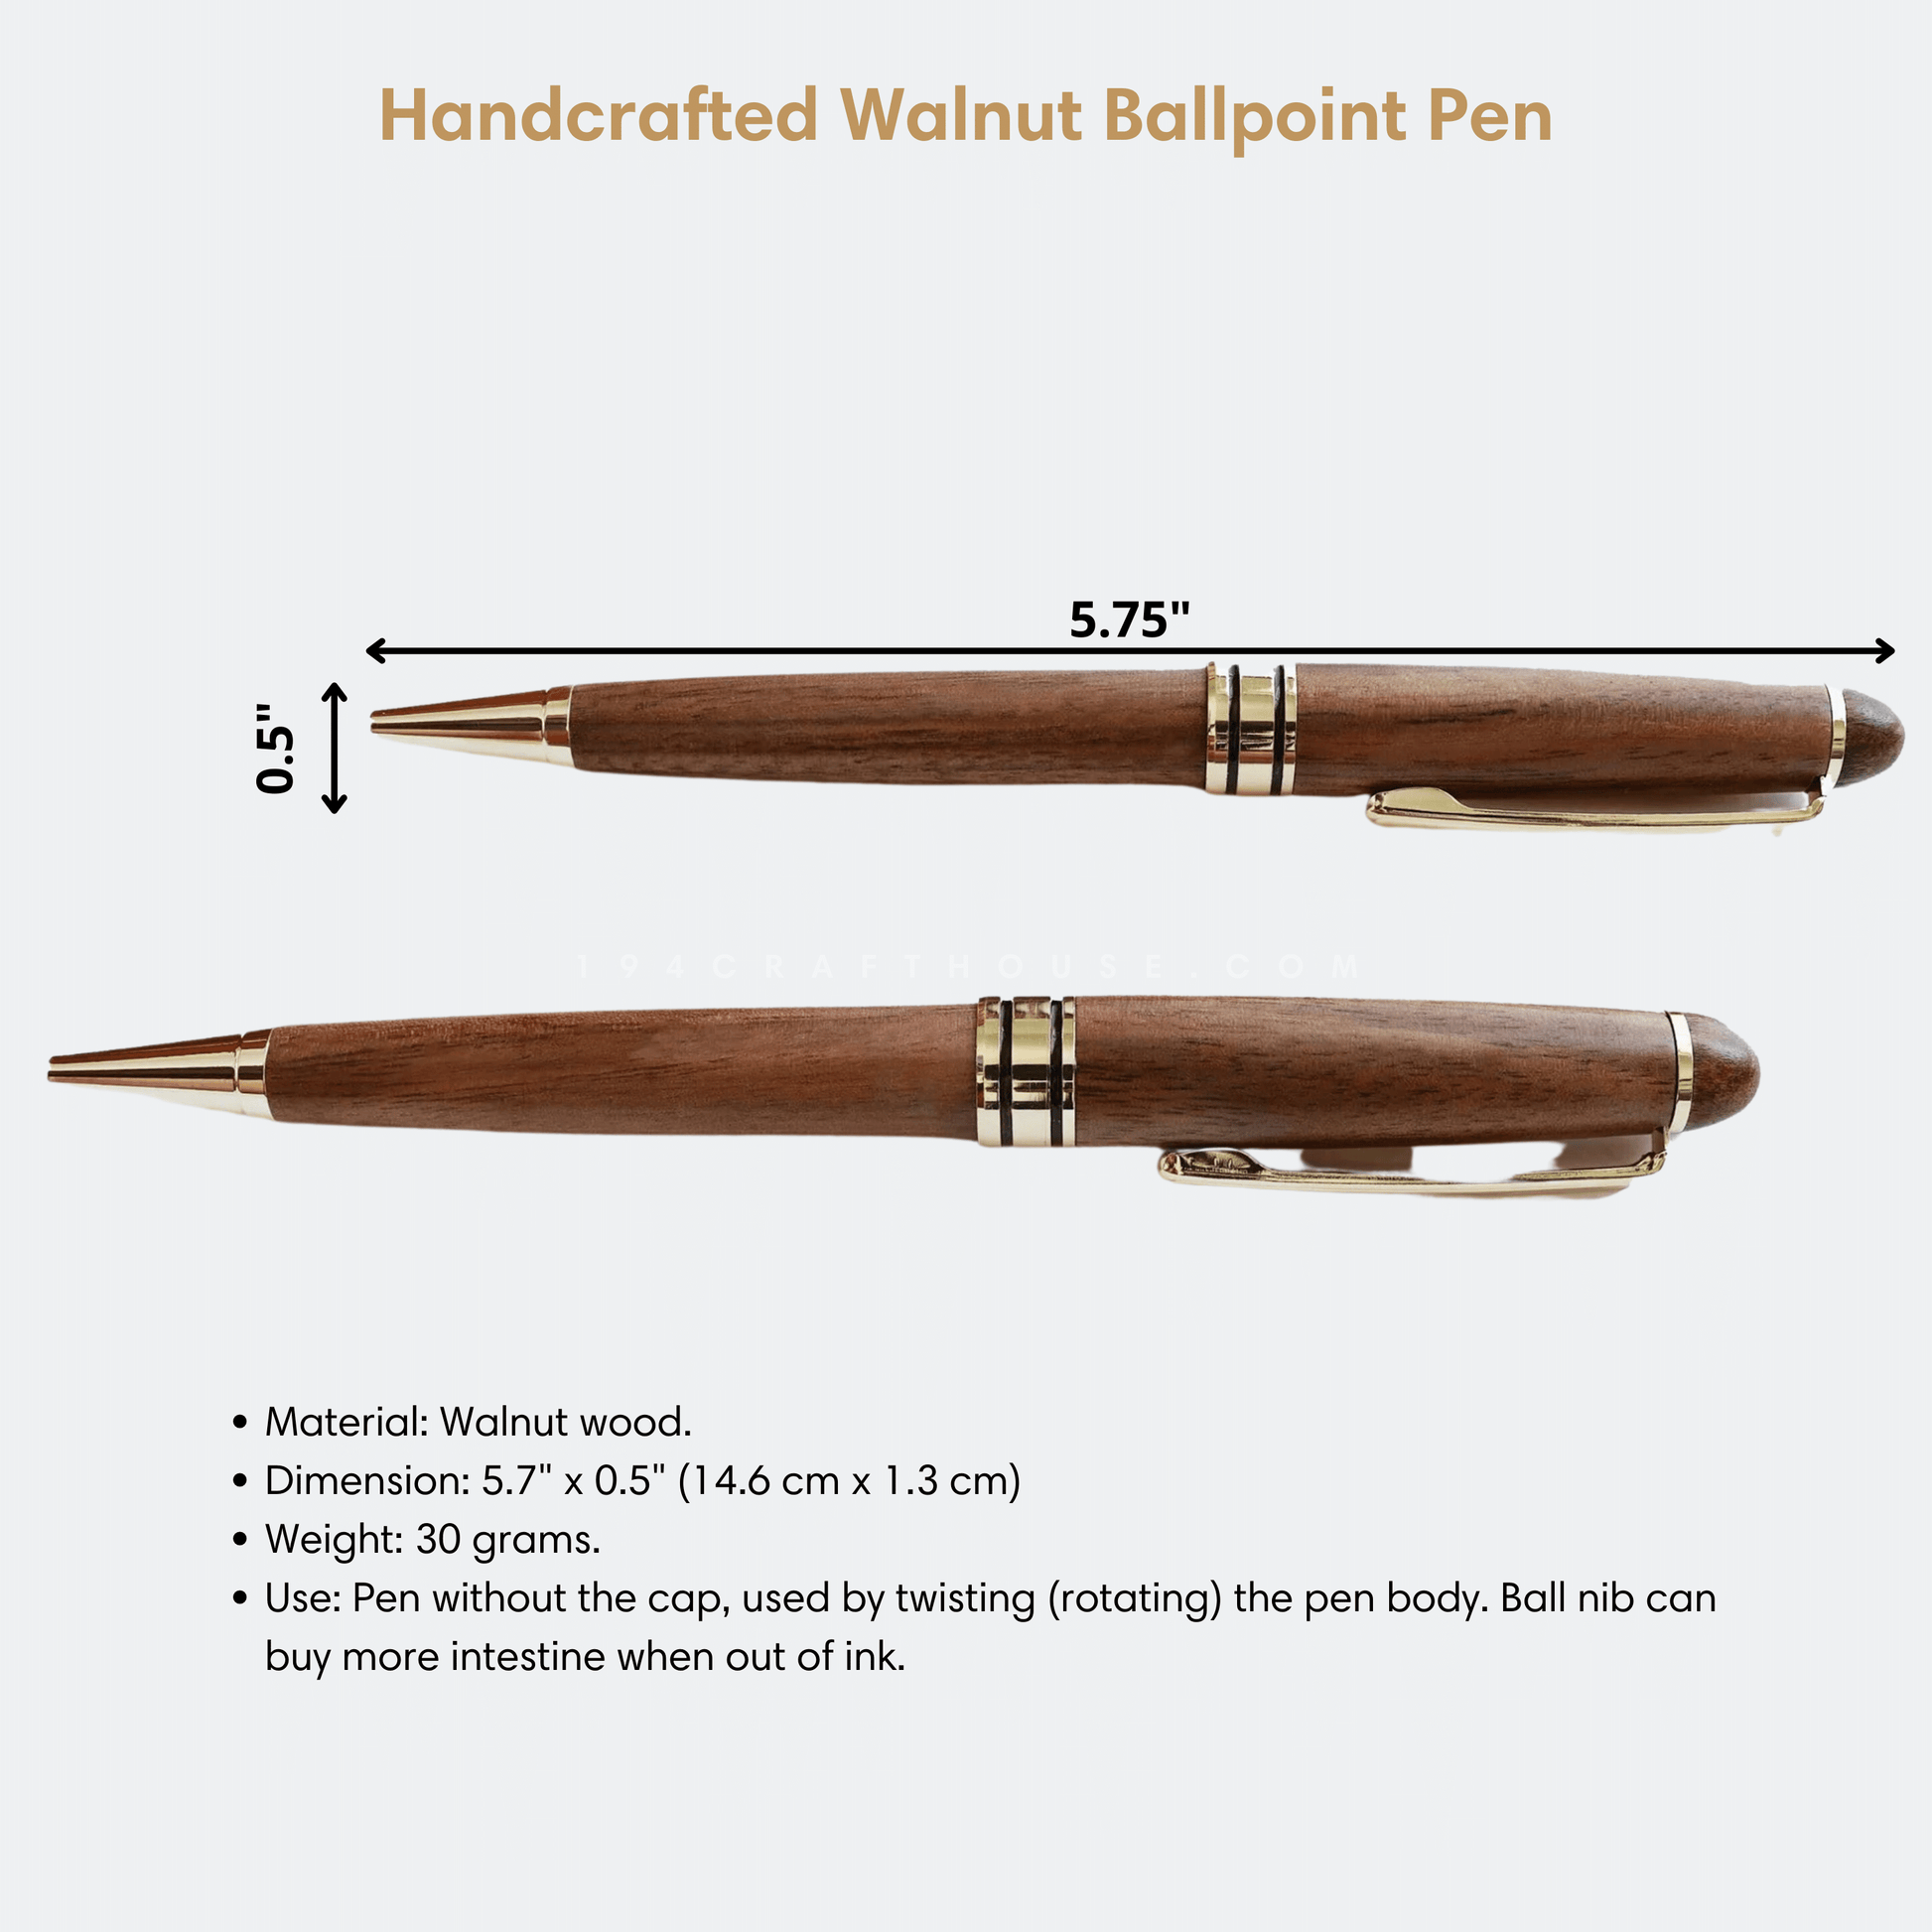 Dark Walnut Wood Custom Engraved Pen Set with Gold Gift Box